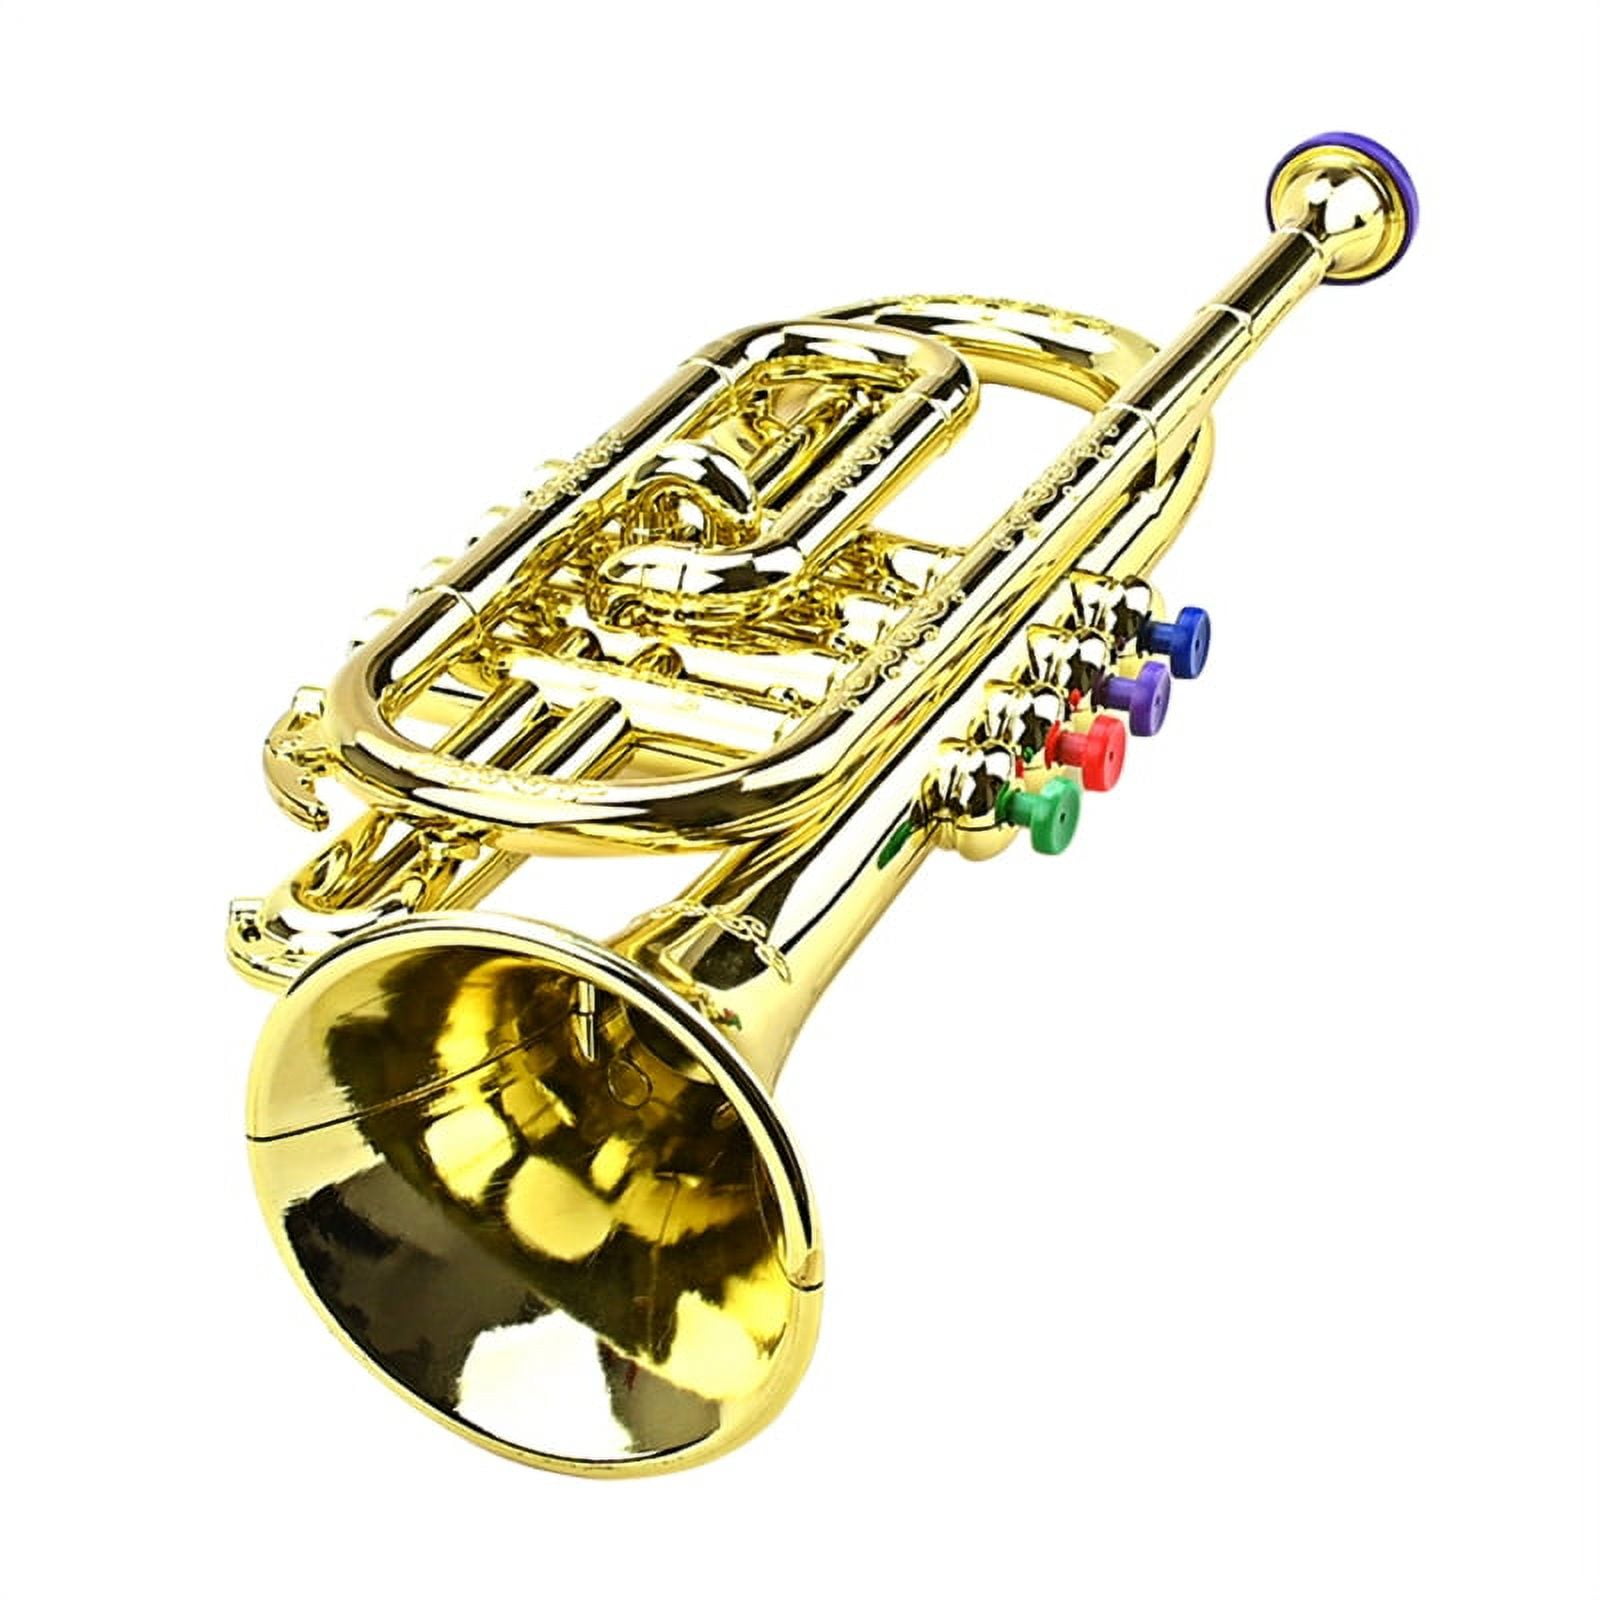 Set of Golden Toy Brass Wind Orchestra Instruments: Saxophone